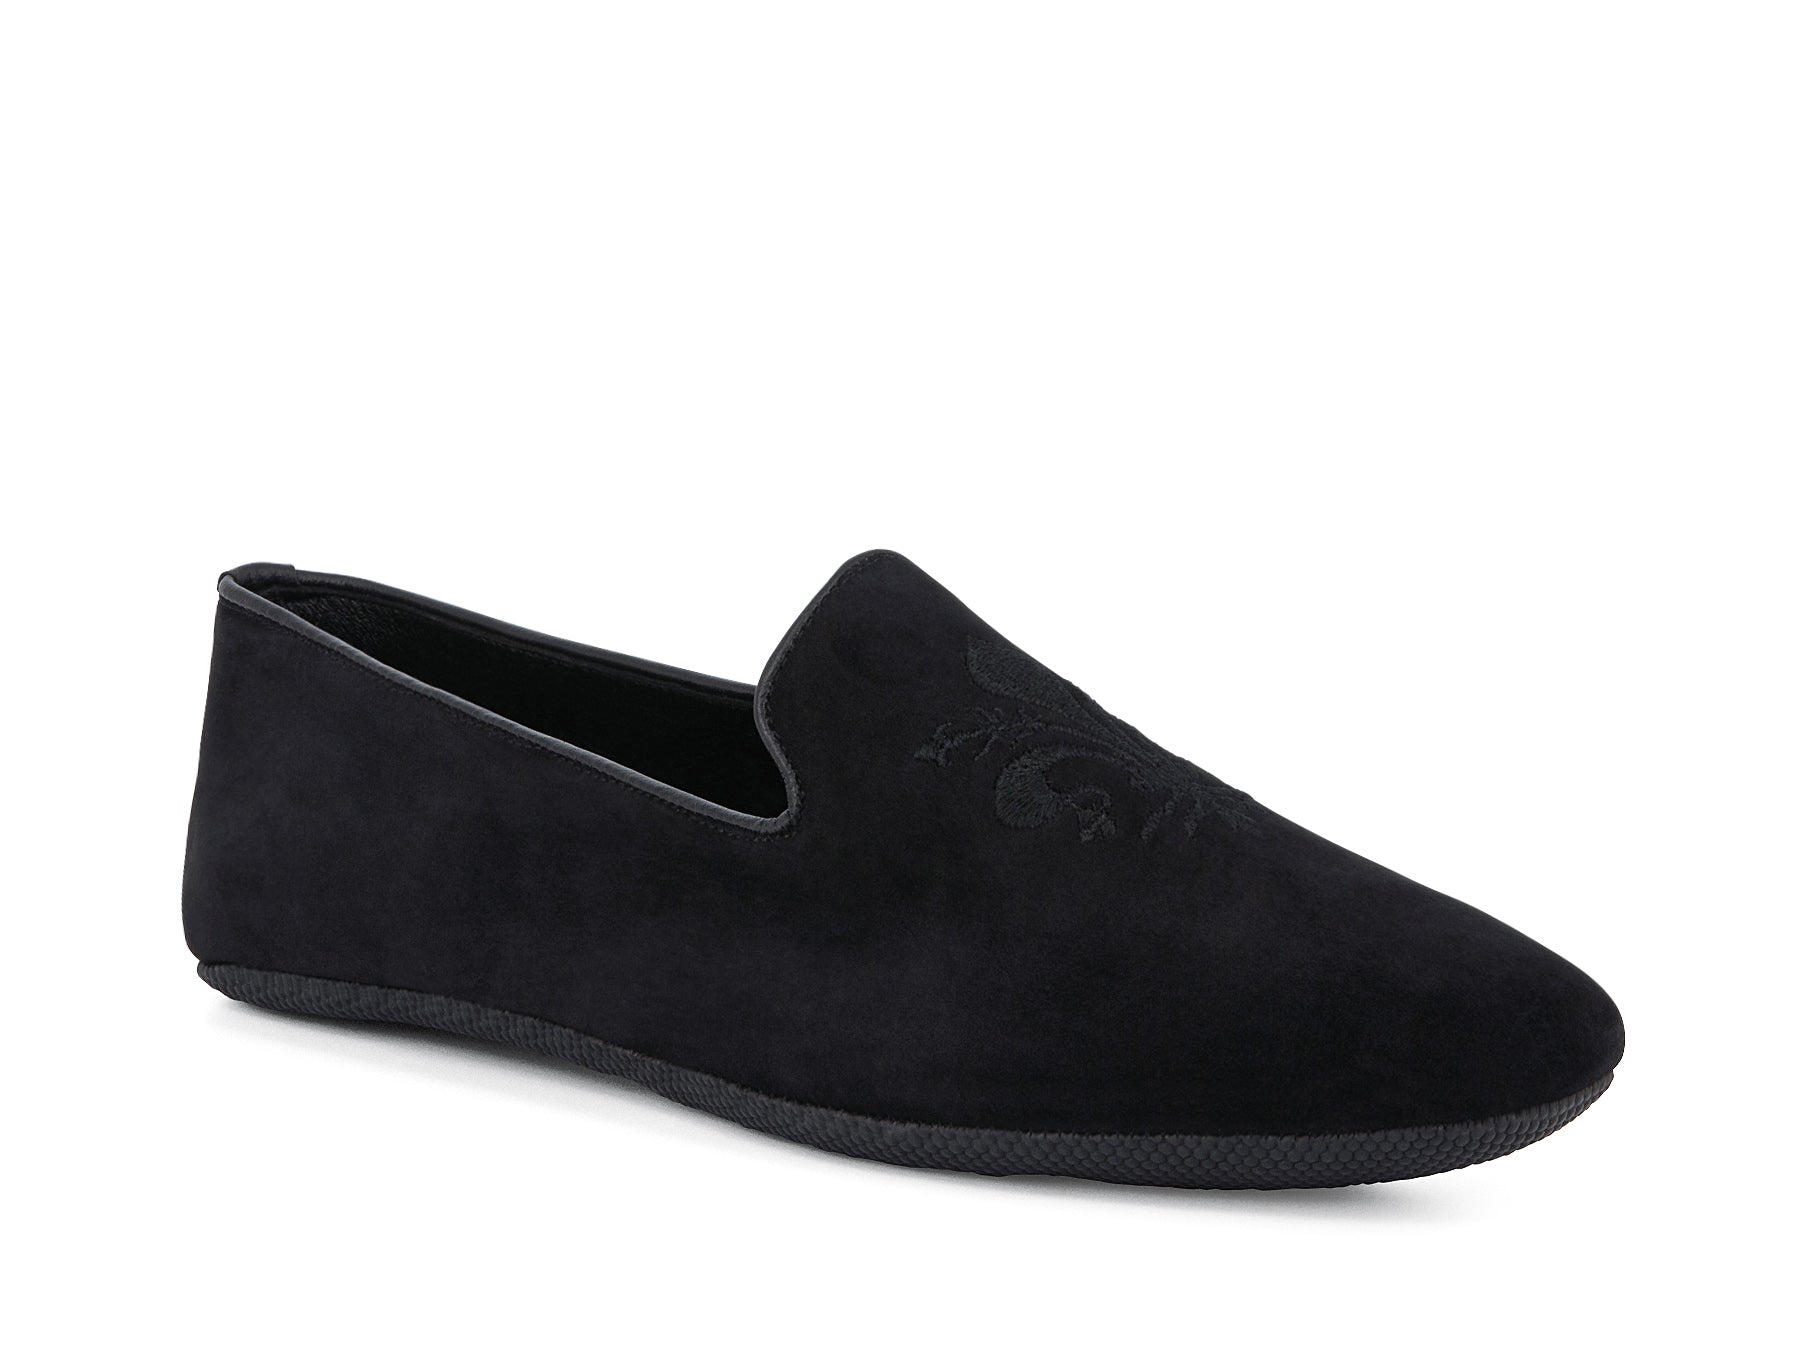 FIORENTINO BLACK | Peter Sheppard Footwear